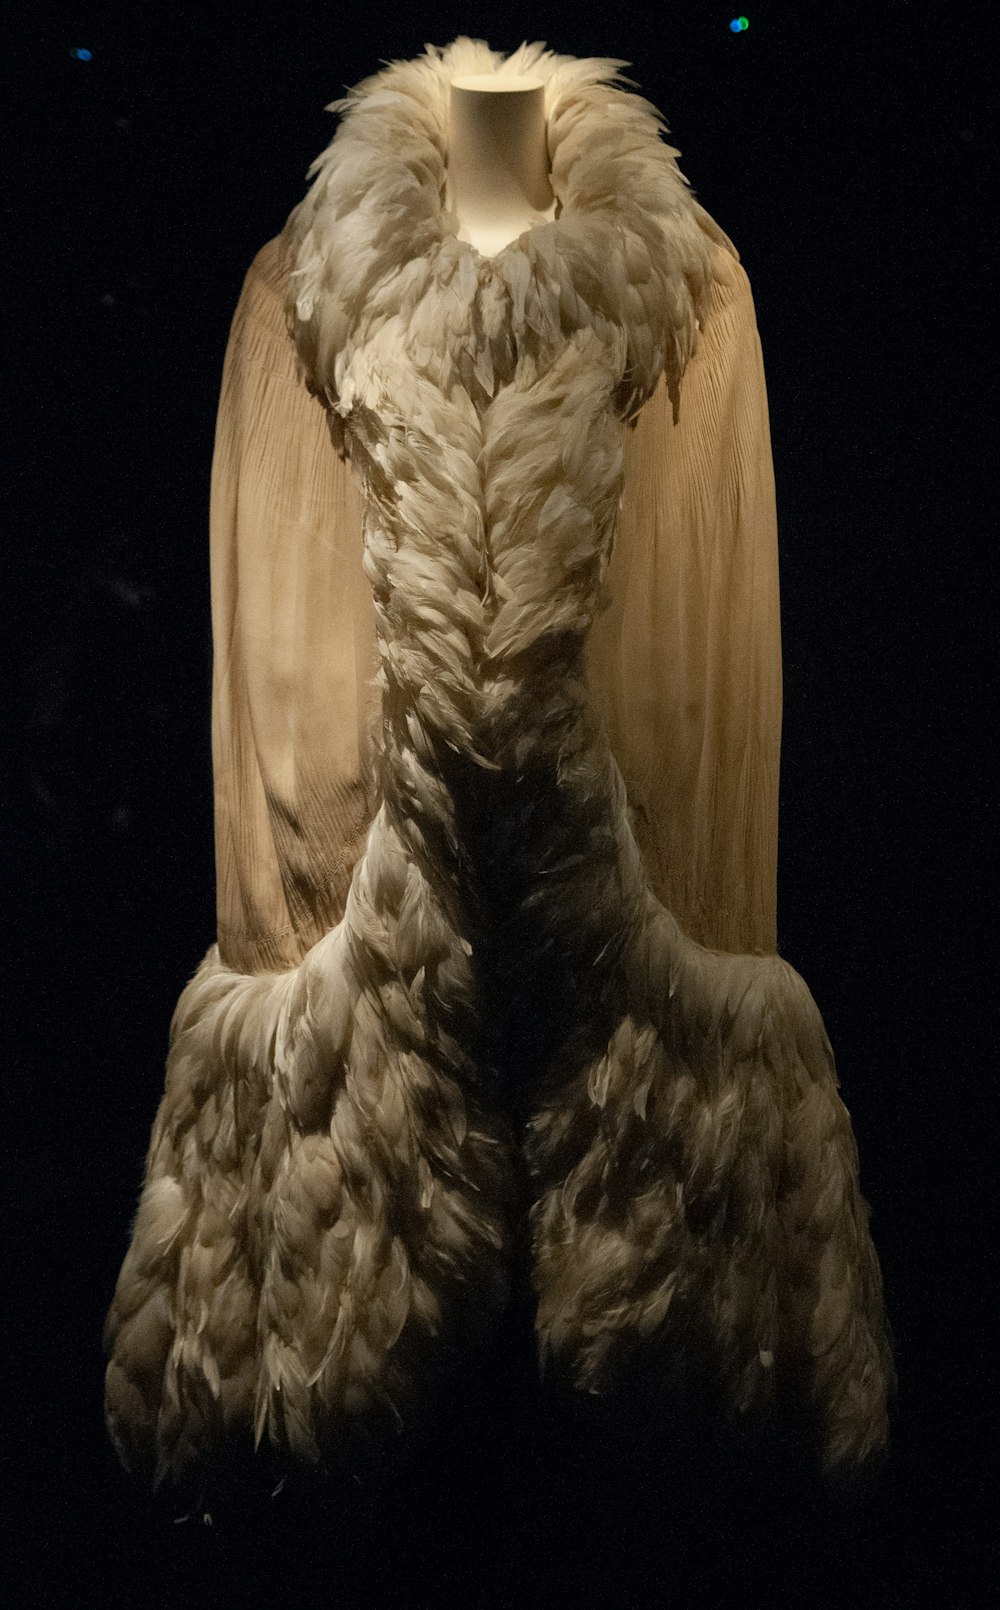 woman in white long sleeve dress